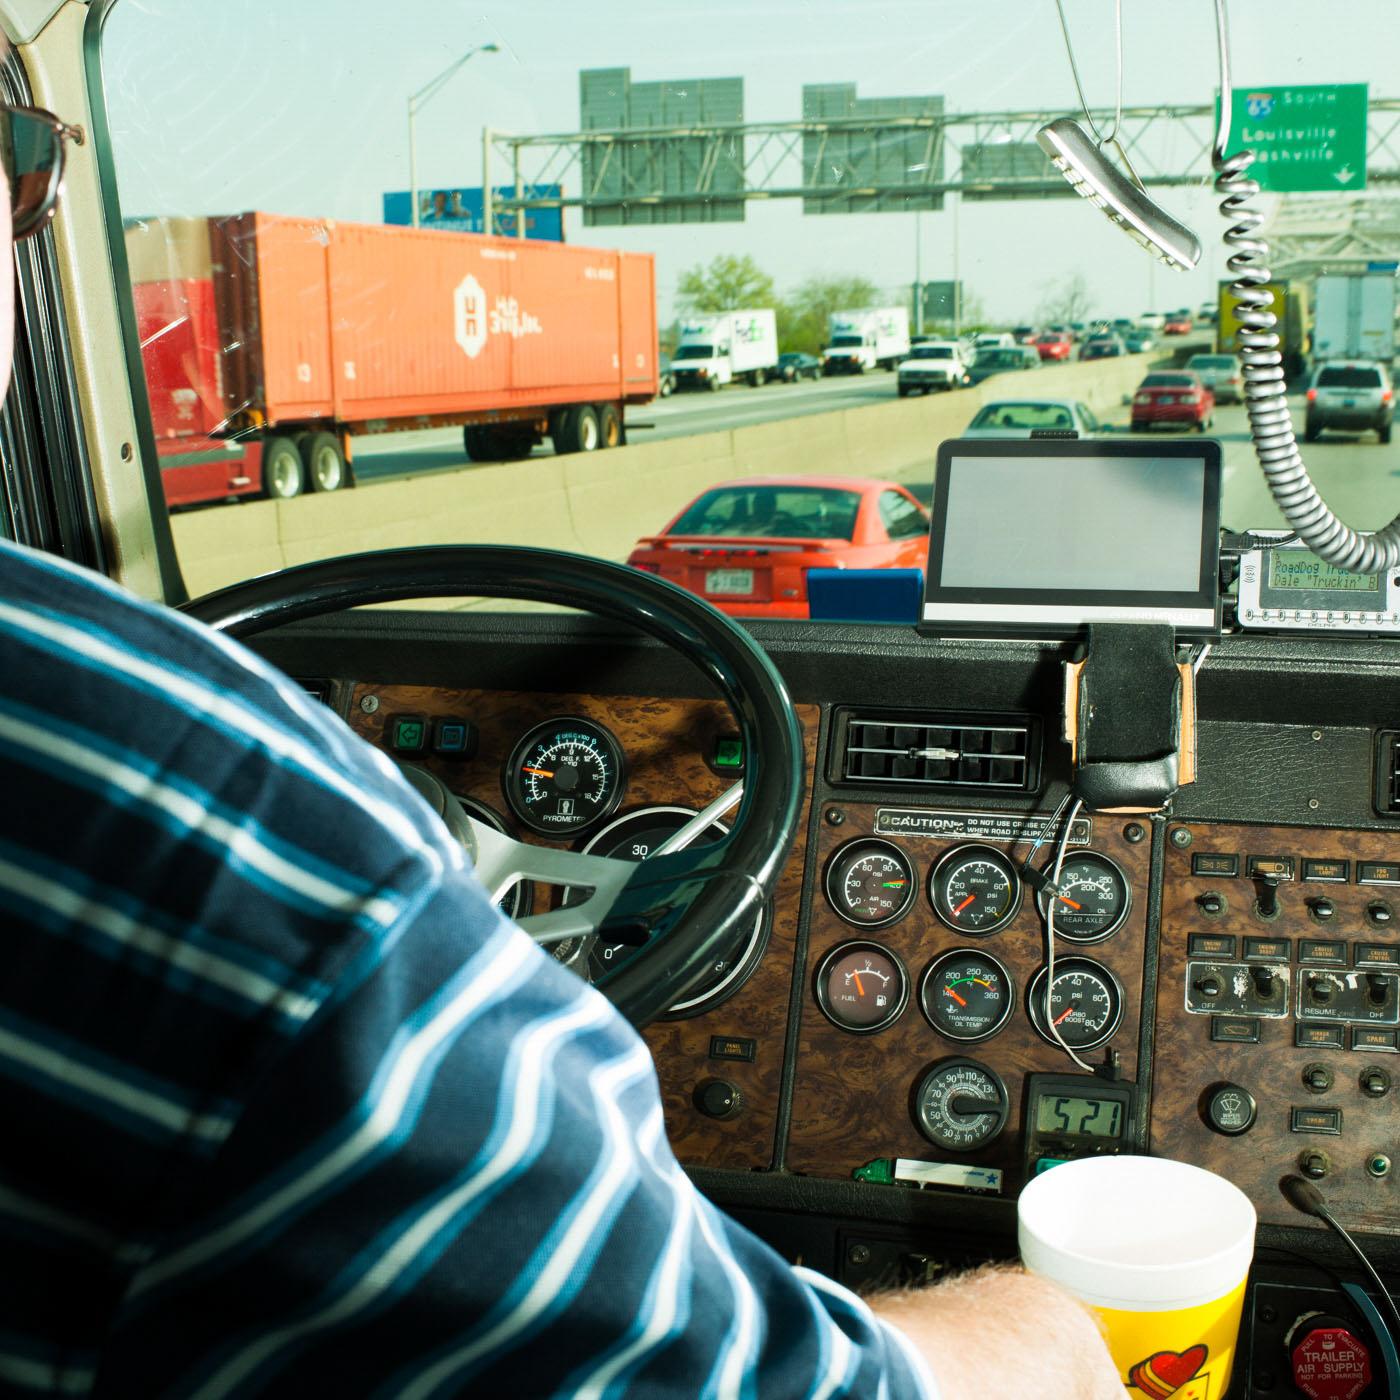 Brian Finke Figurative Photograph - Untitled (Truckers no. 13), photograph